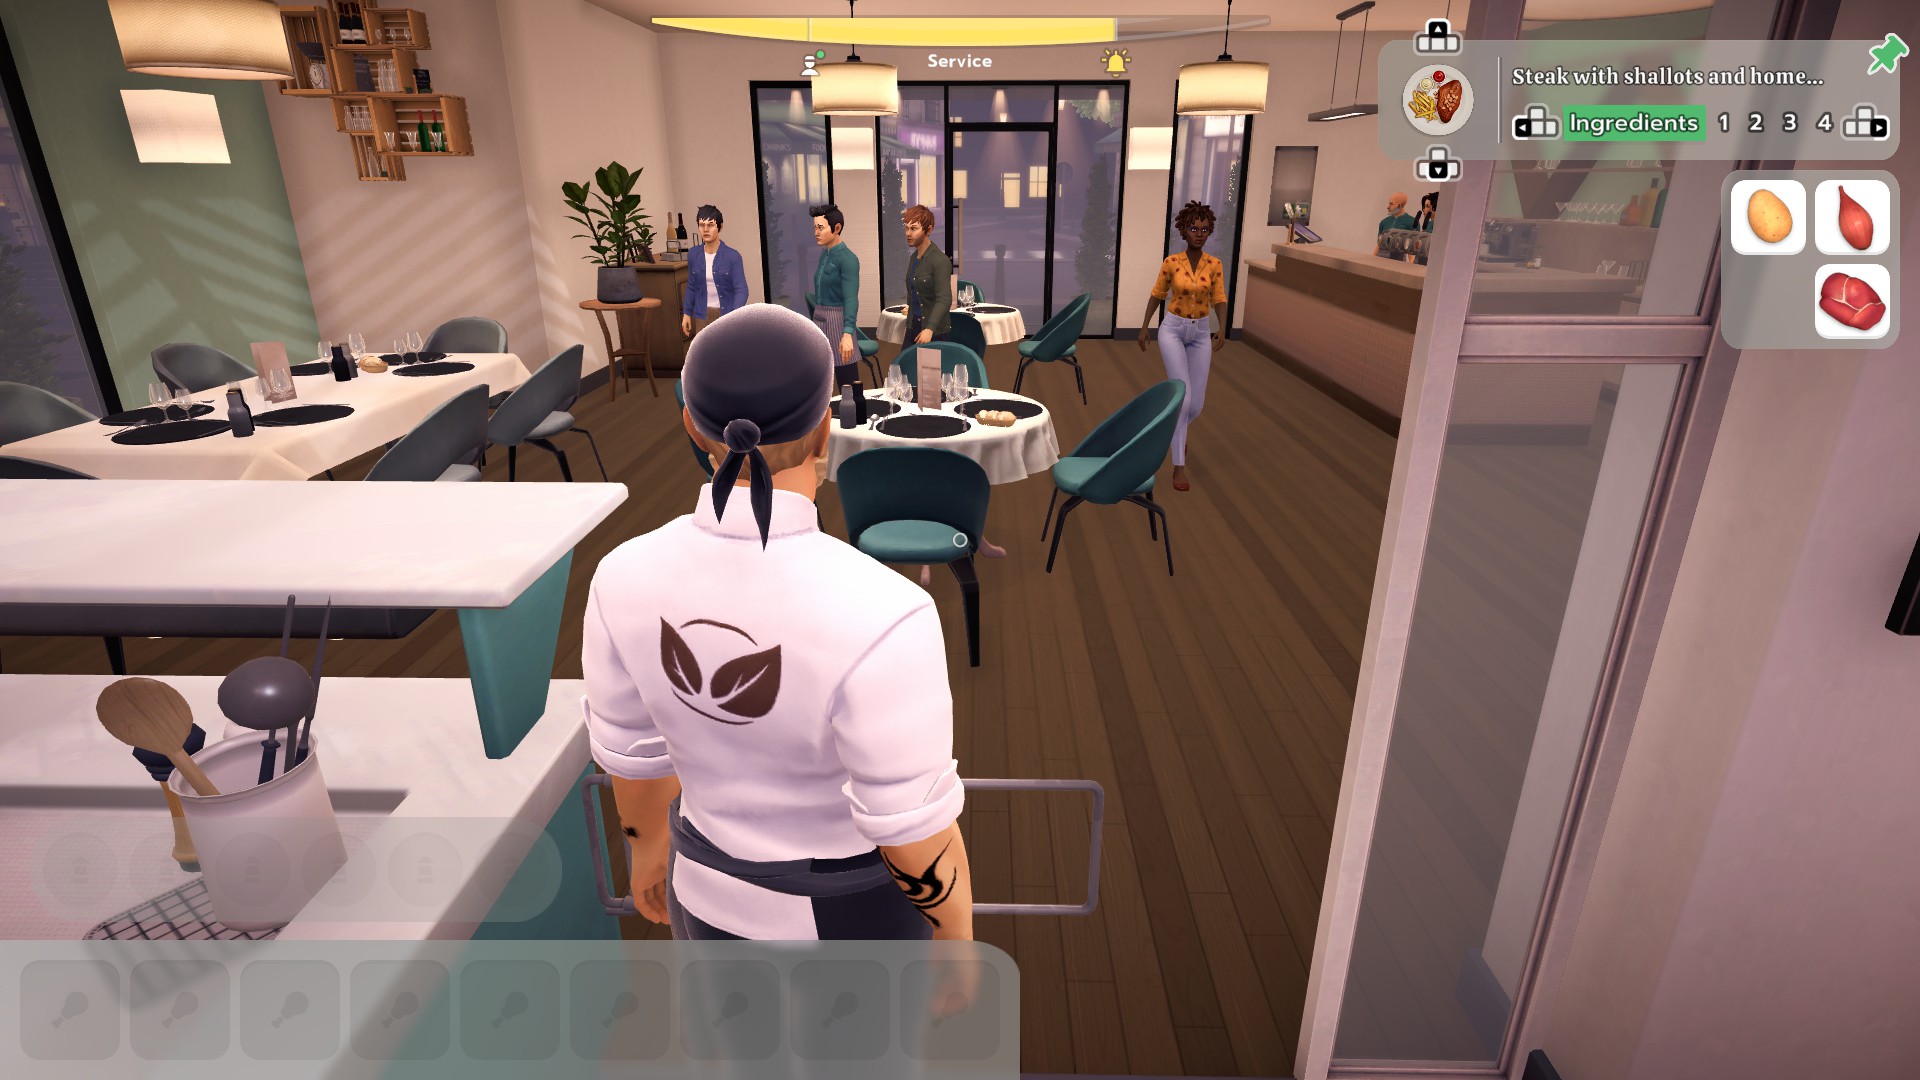 Chef Life: A Restaurant Simulator on Steam